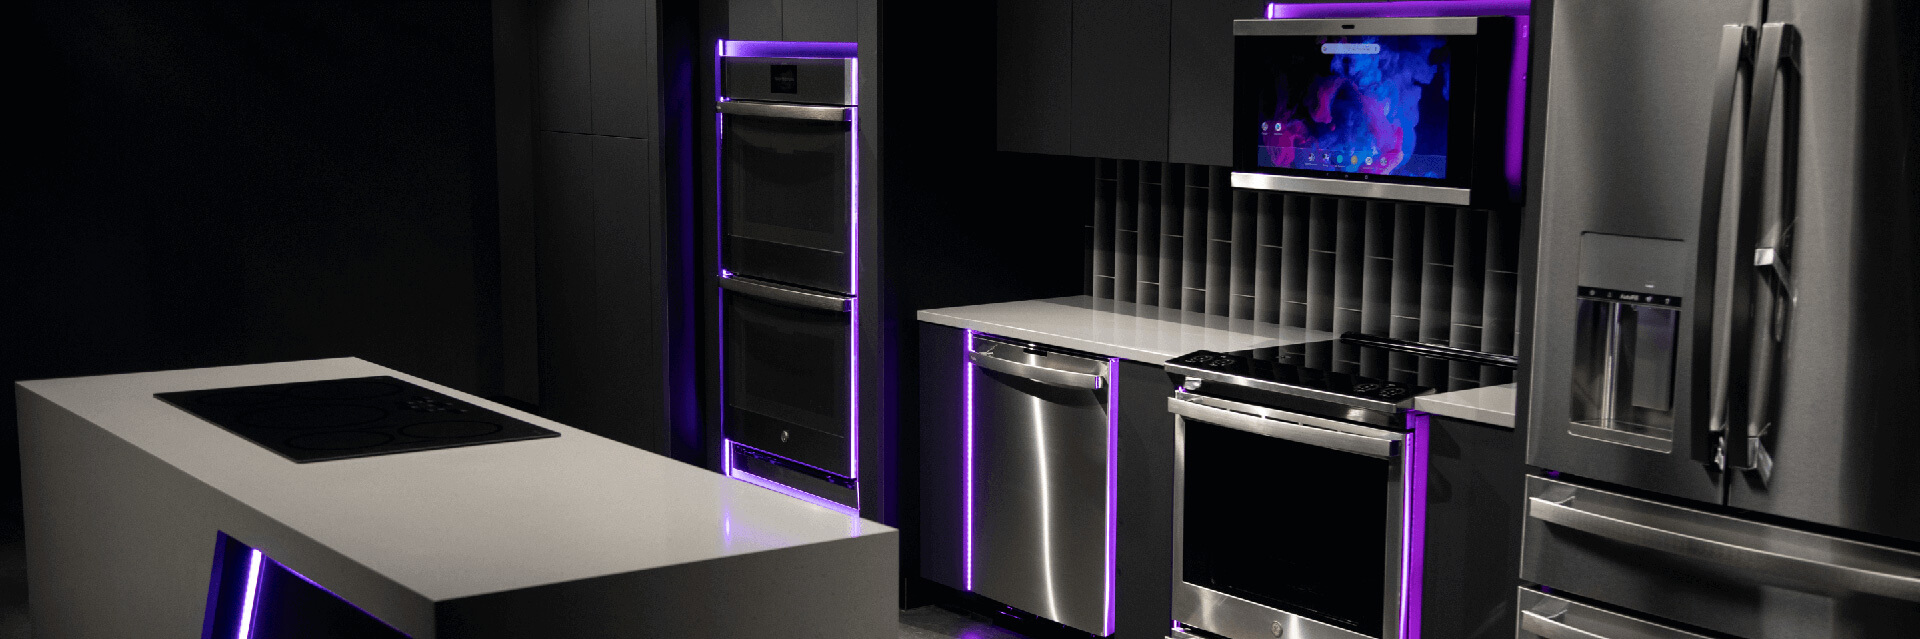 GE Profile Caf Kitchen Appliances Sale Superco Appliances Furniture Home Design